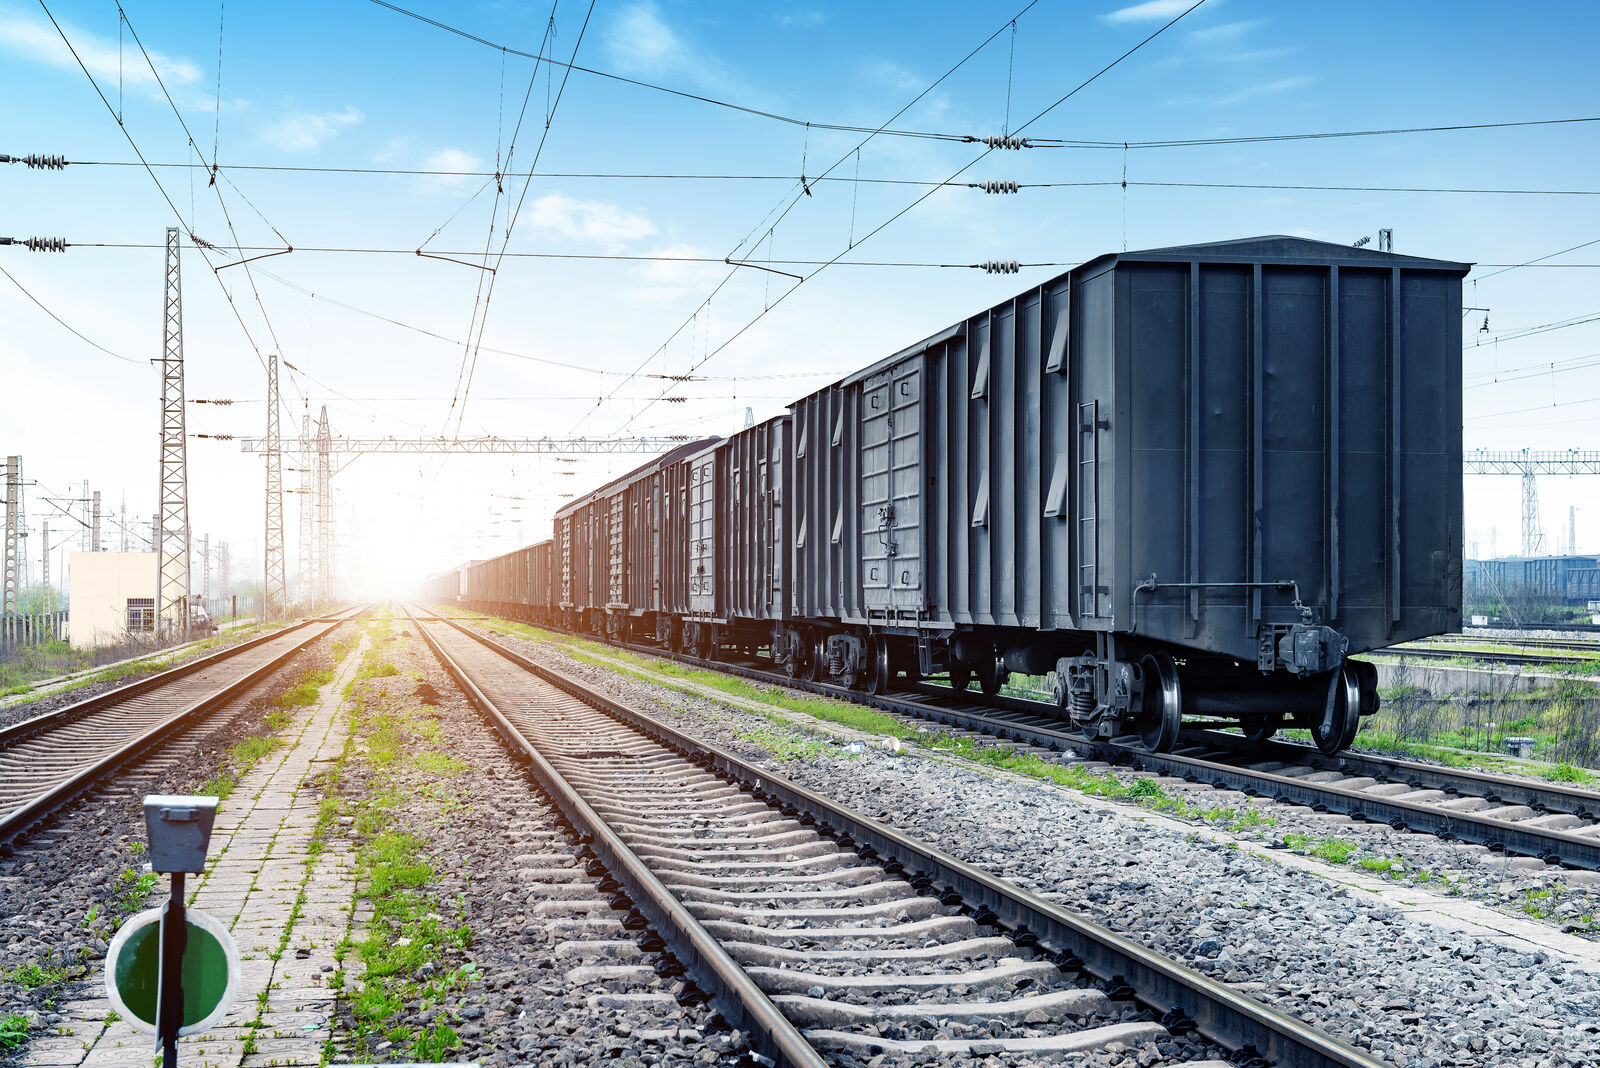 Rail-freight-train-track-safety-medium.jpg